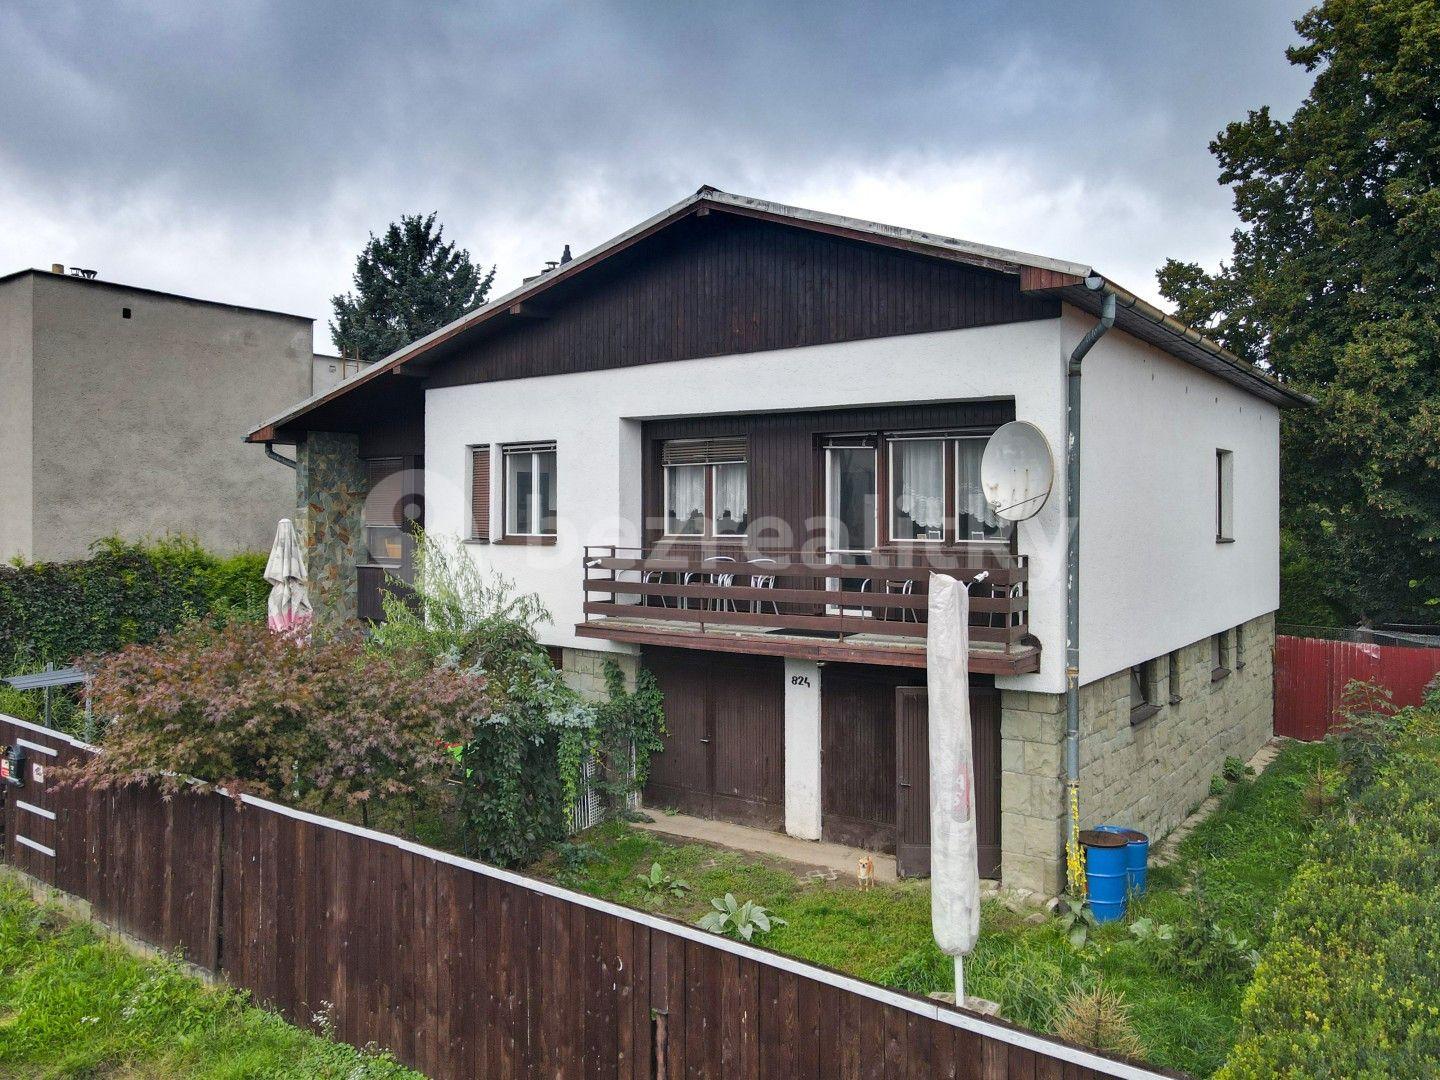 Prodej domu 280 m², pozemek 473 m², Stratilova, Ostrava, Moravskoslezský kraj